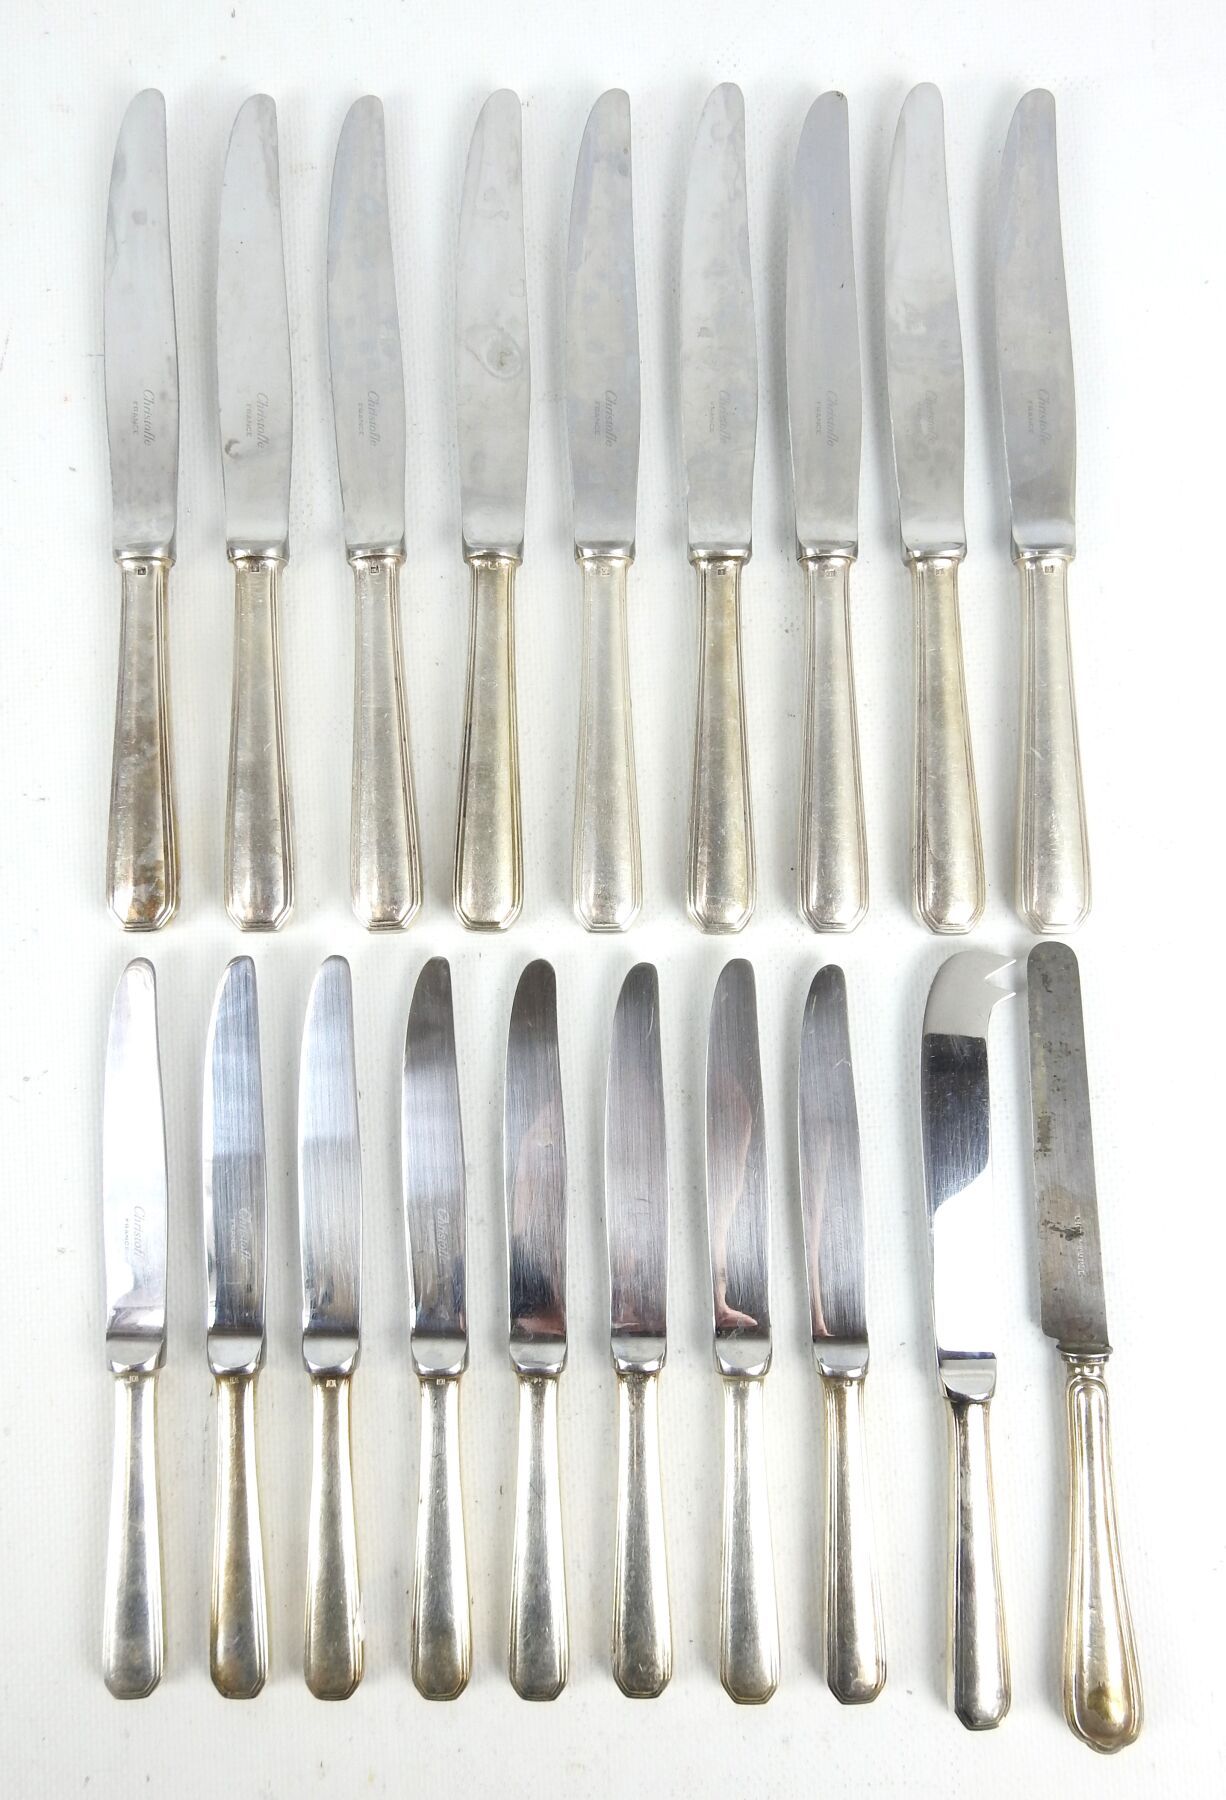 Null 克里斯托弗一套美国款镀银刀具，包括八把奶酪刀和九把大刀。因使用而磨损。其中包括一把奶酪餐刀和一把古董钢刀。